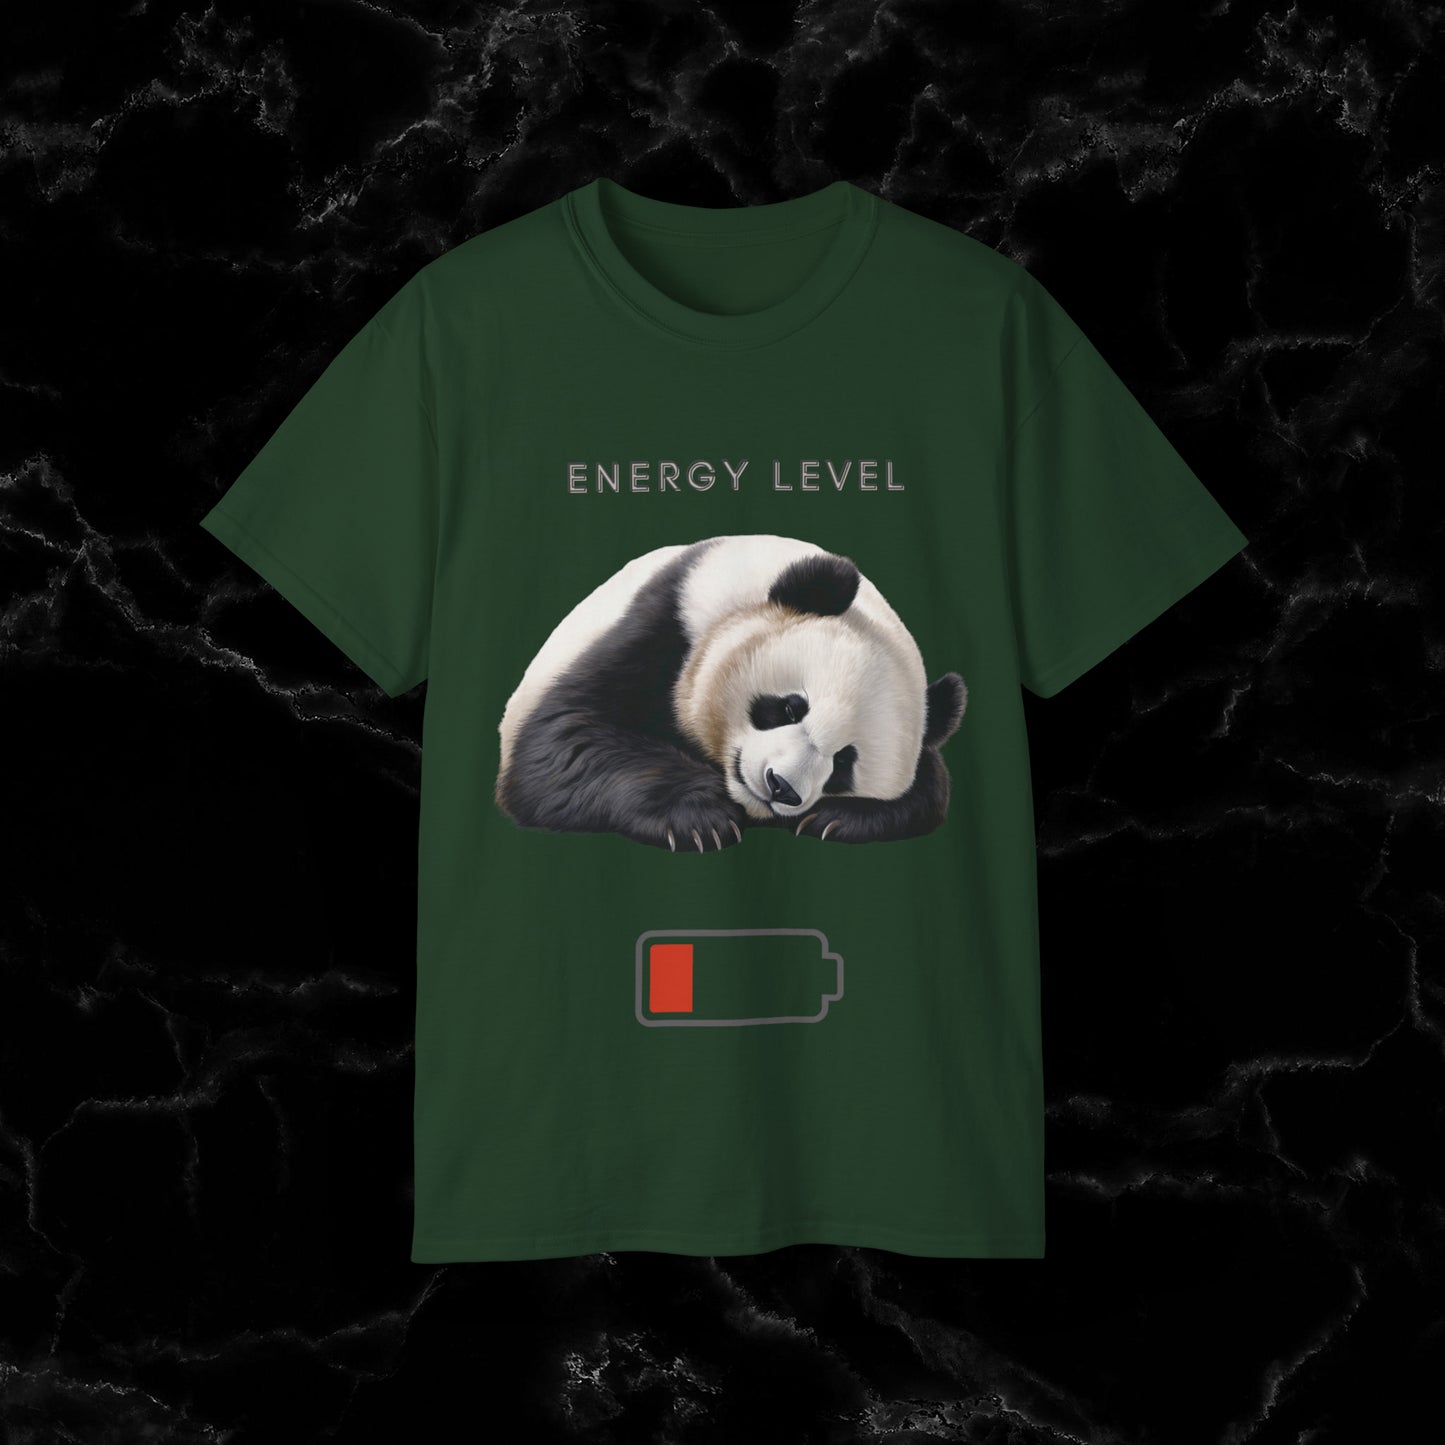 Nap Time Panda Unisex Funny Tee - Hilarious Panda Nap Design - Energy Level T-Shirt Forest Green S 